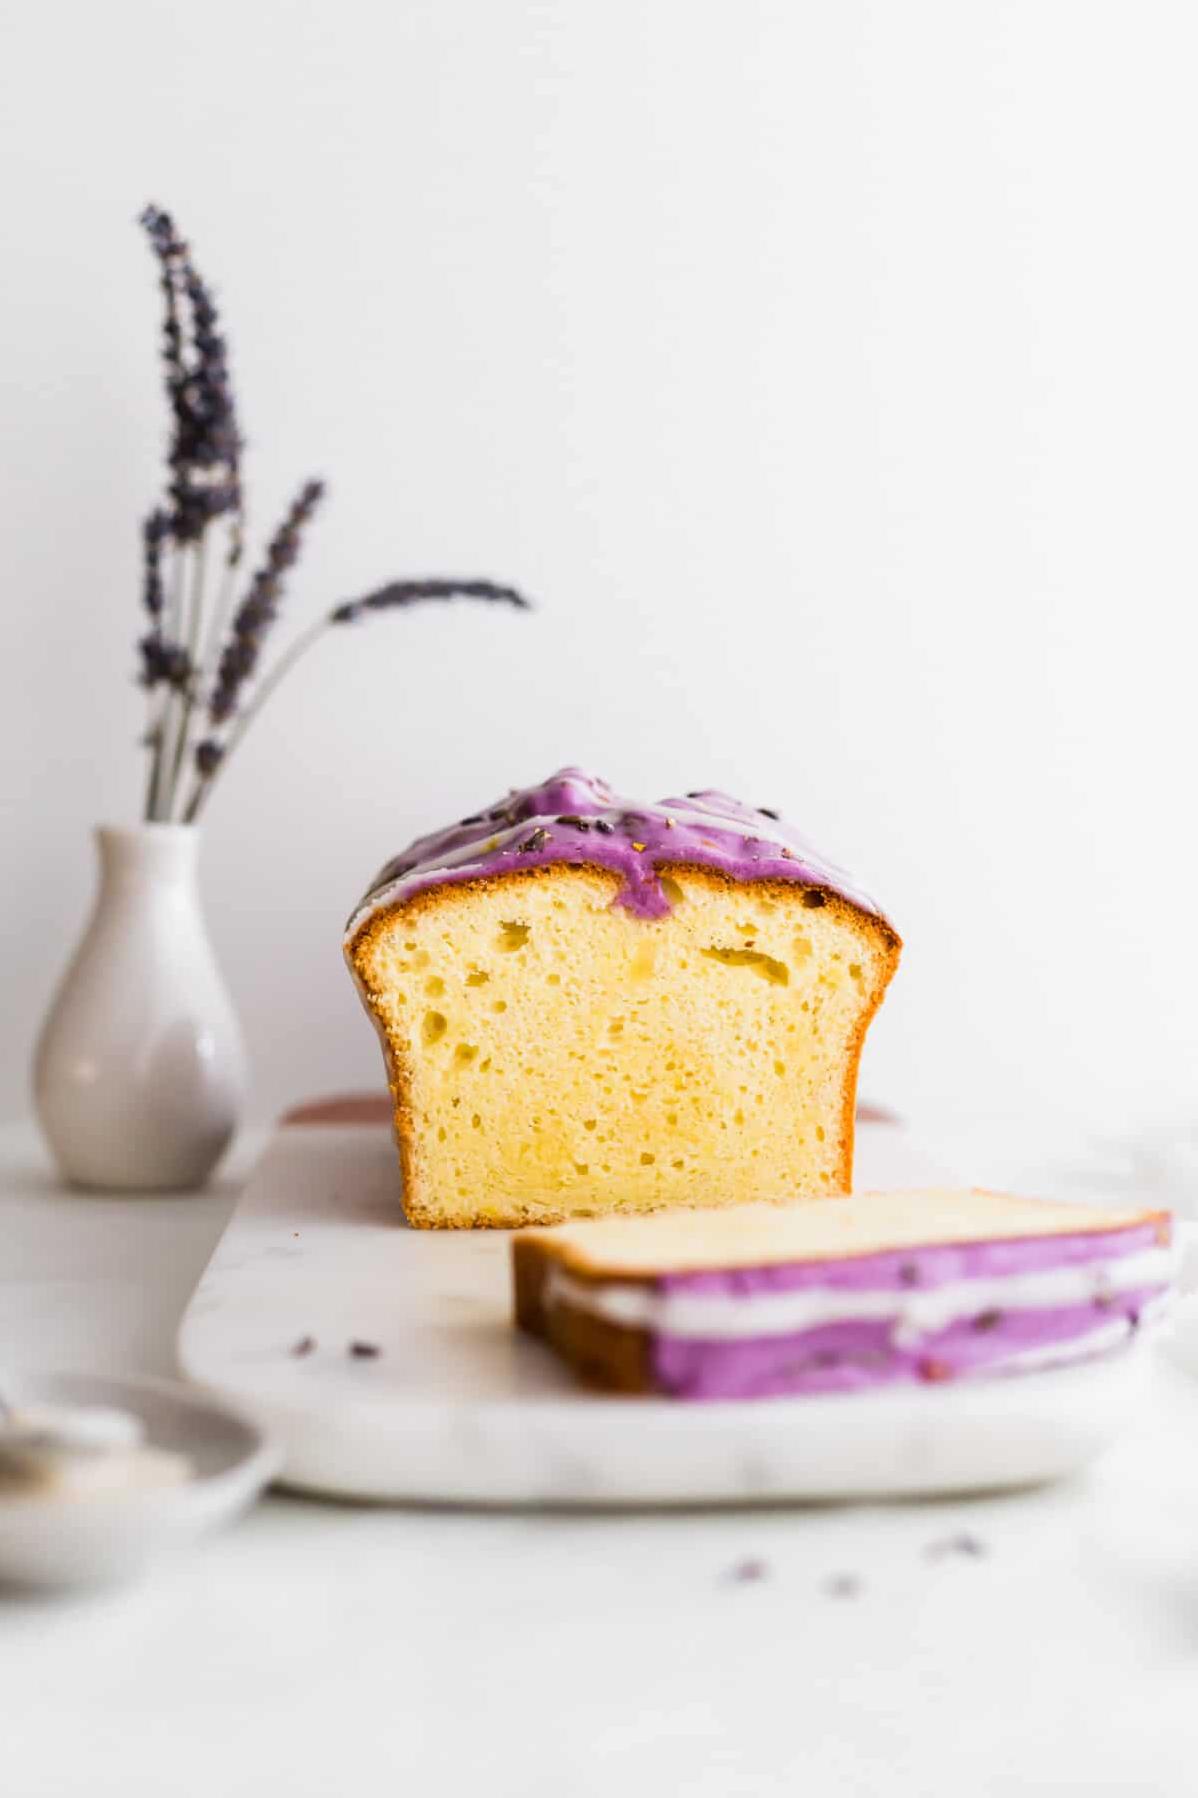  A slice of heaven: Lavender-Lemon Pound Cake